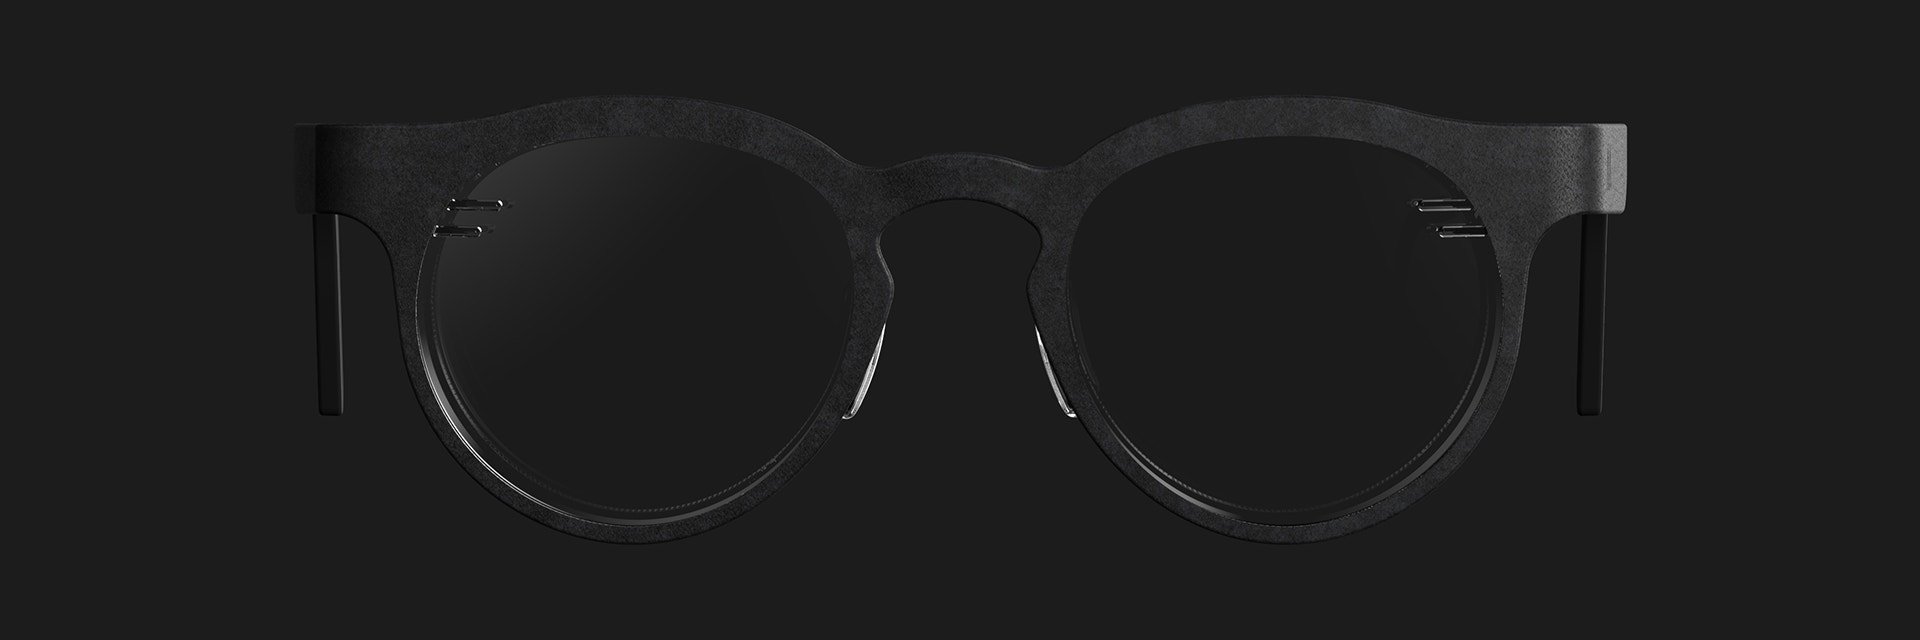 Black Morrow Optics frames on a black background